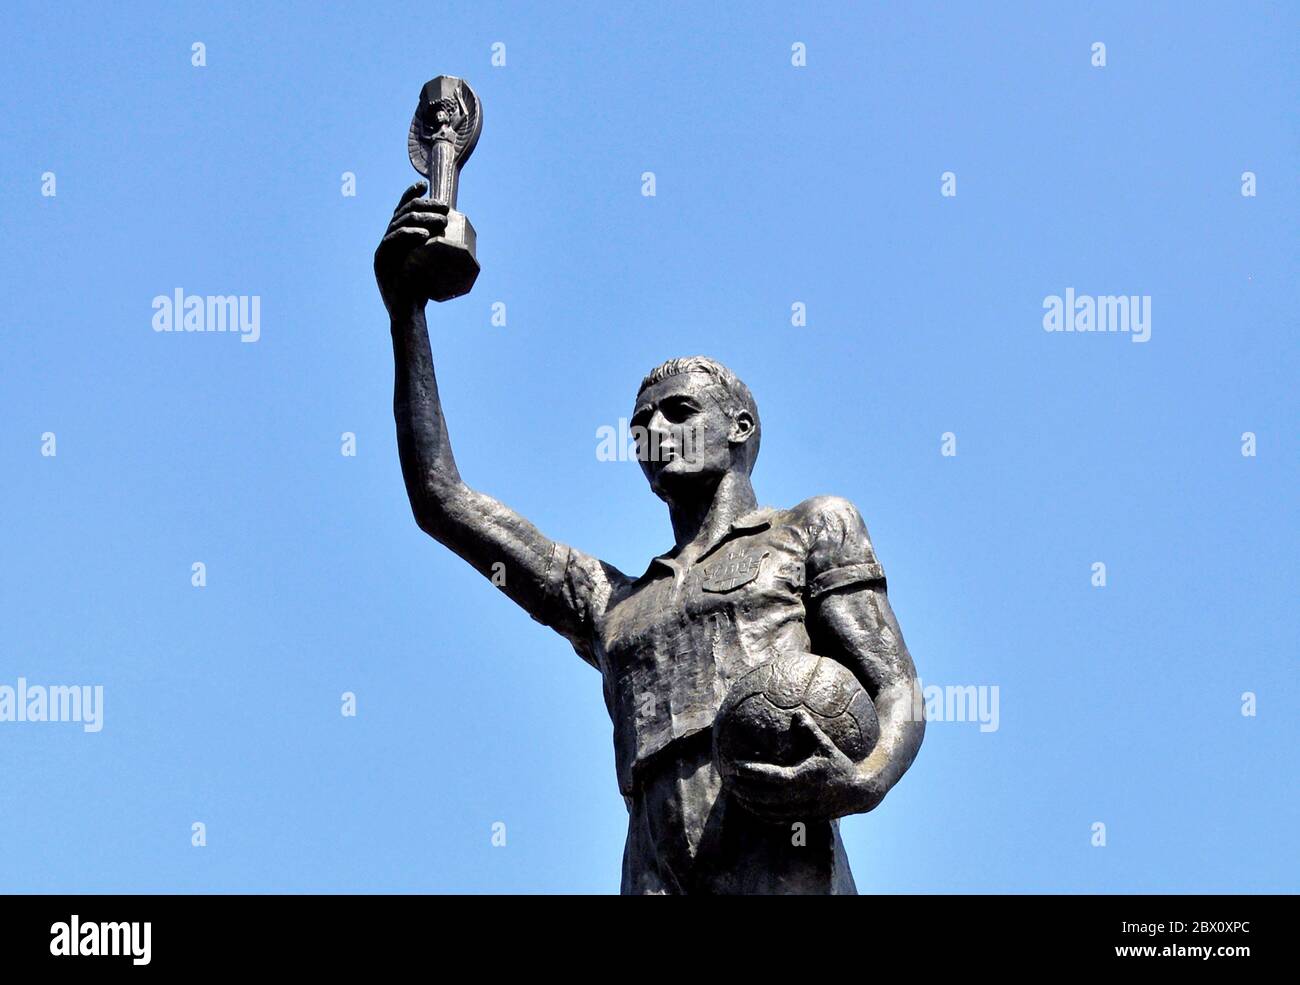 statue of Hilderaldo Bellini, the captain of Brazil's team winner of the world cup 1958 and 1962, Maracana stadium, Rio de Janeiro, Brazil Stock Photo